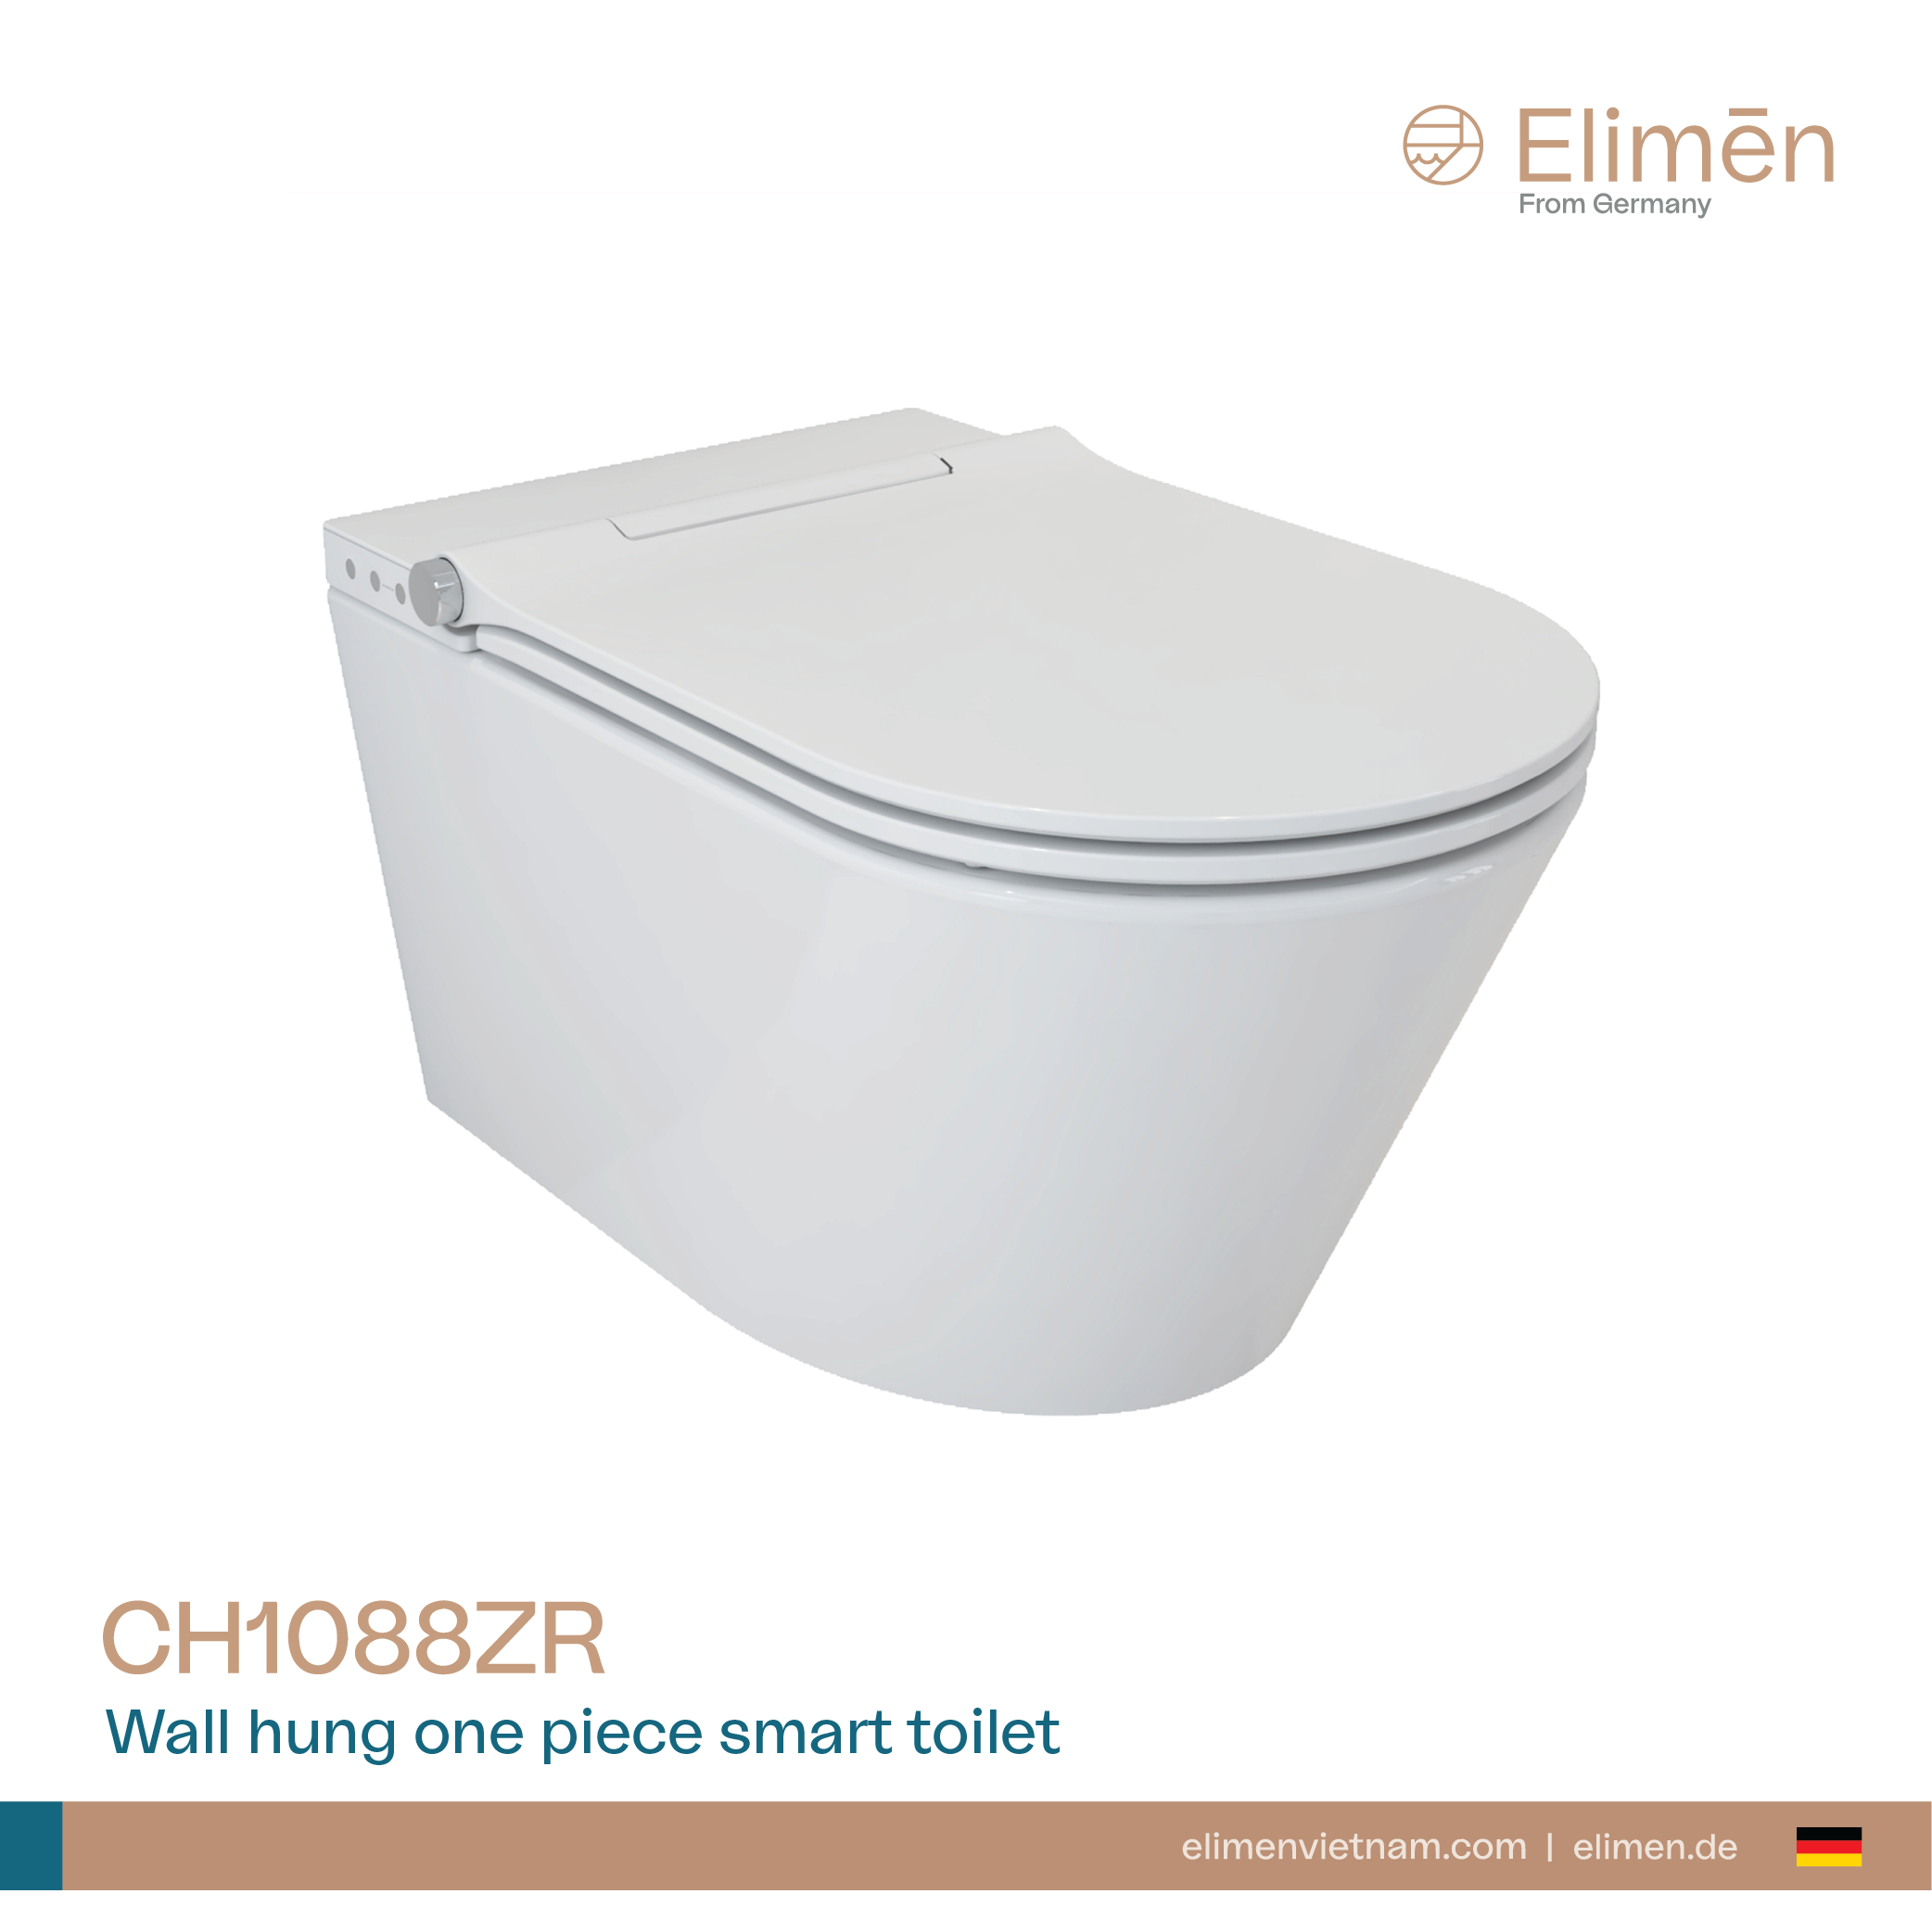 Elimen intelligent toilet - Code CH1088ZR-305